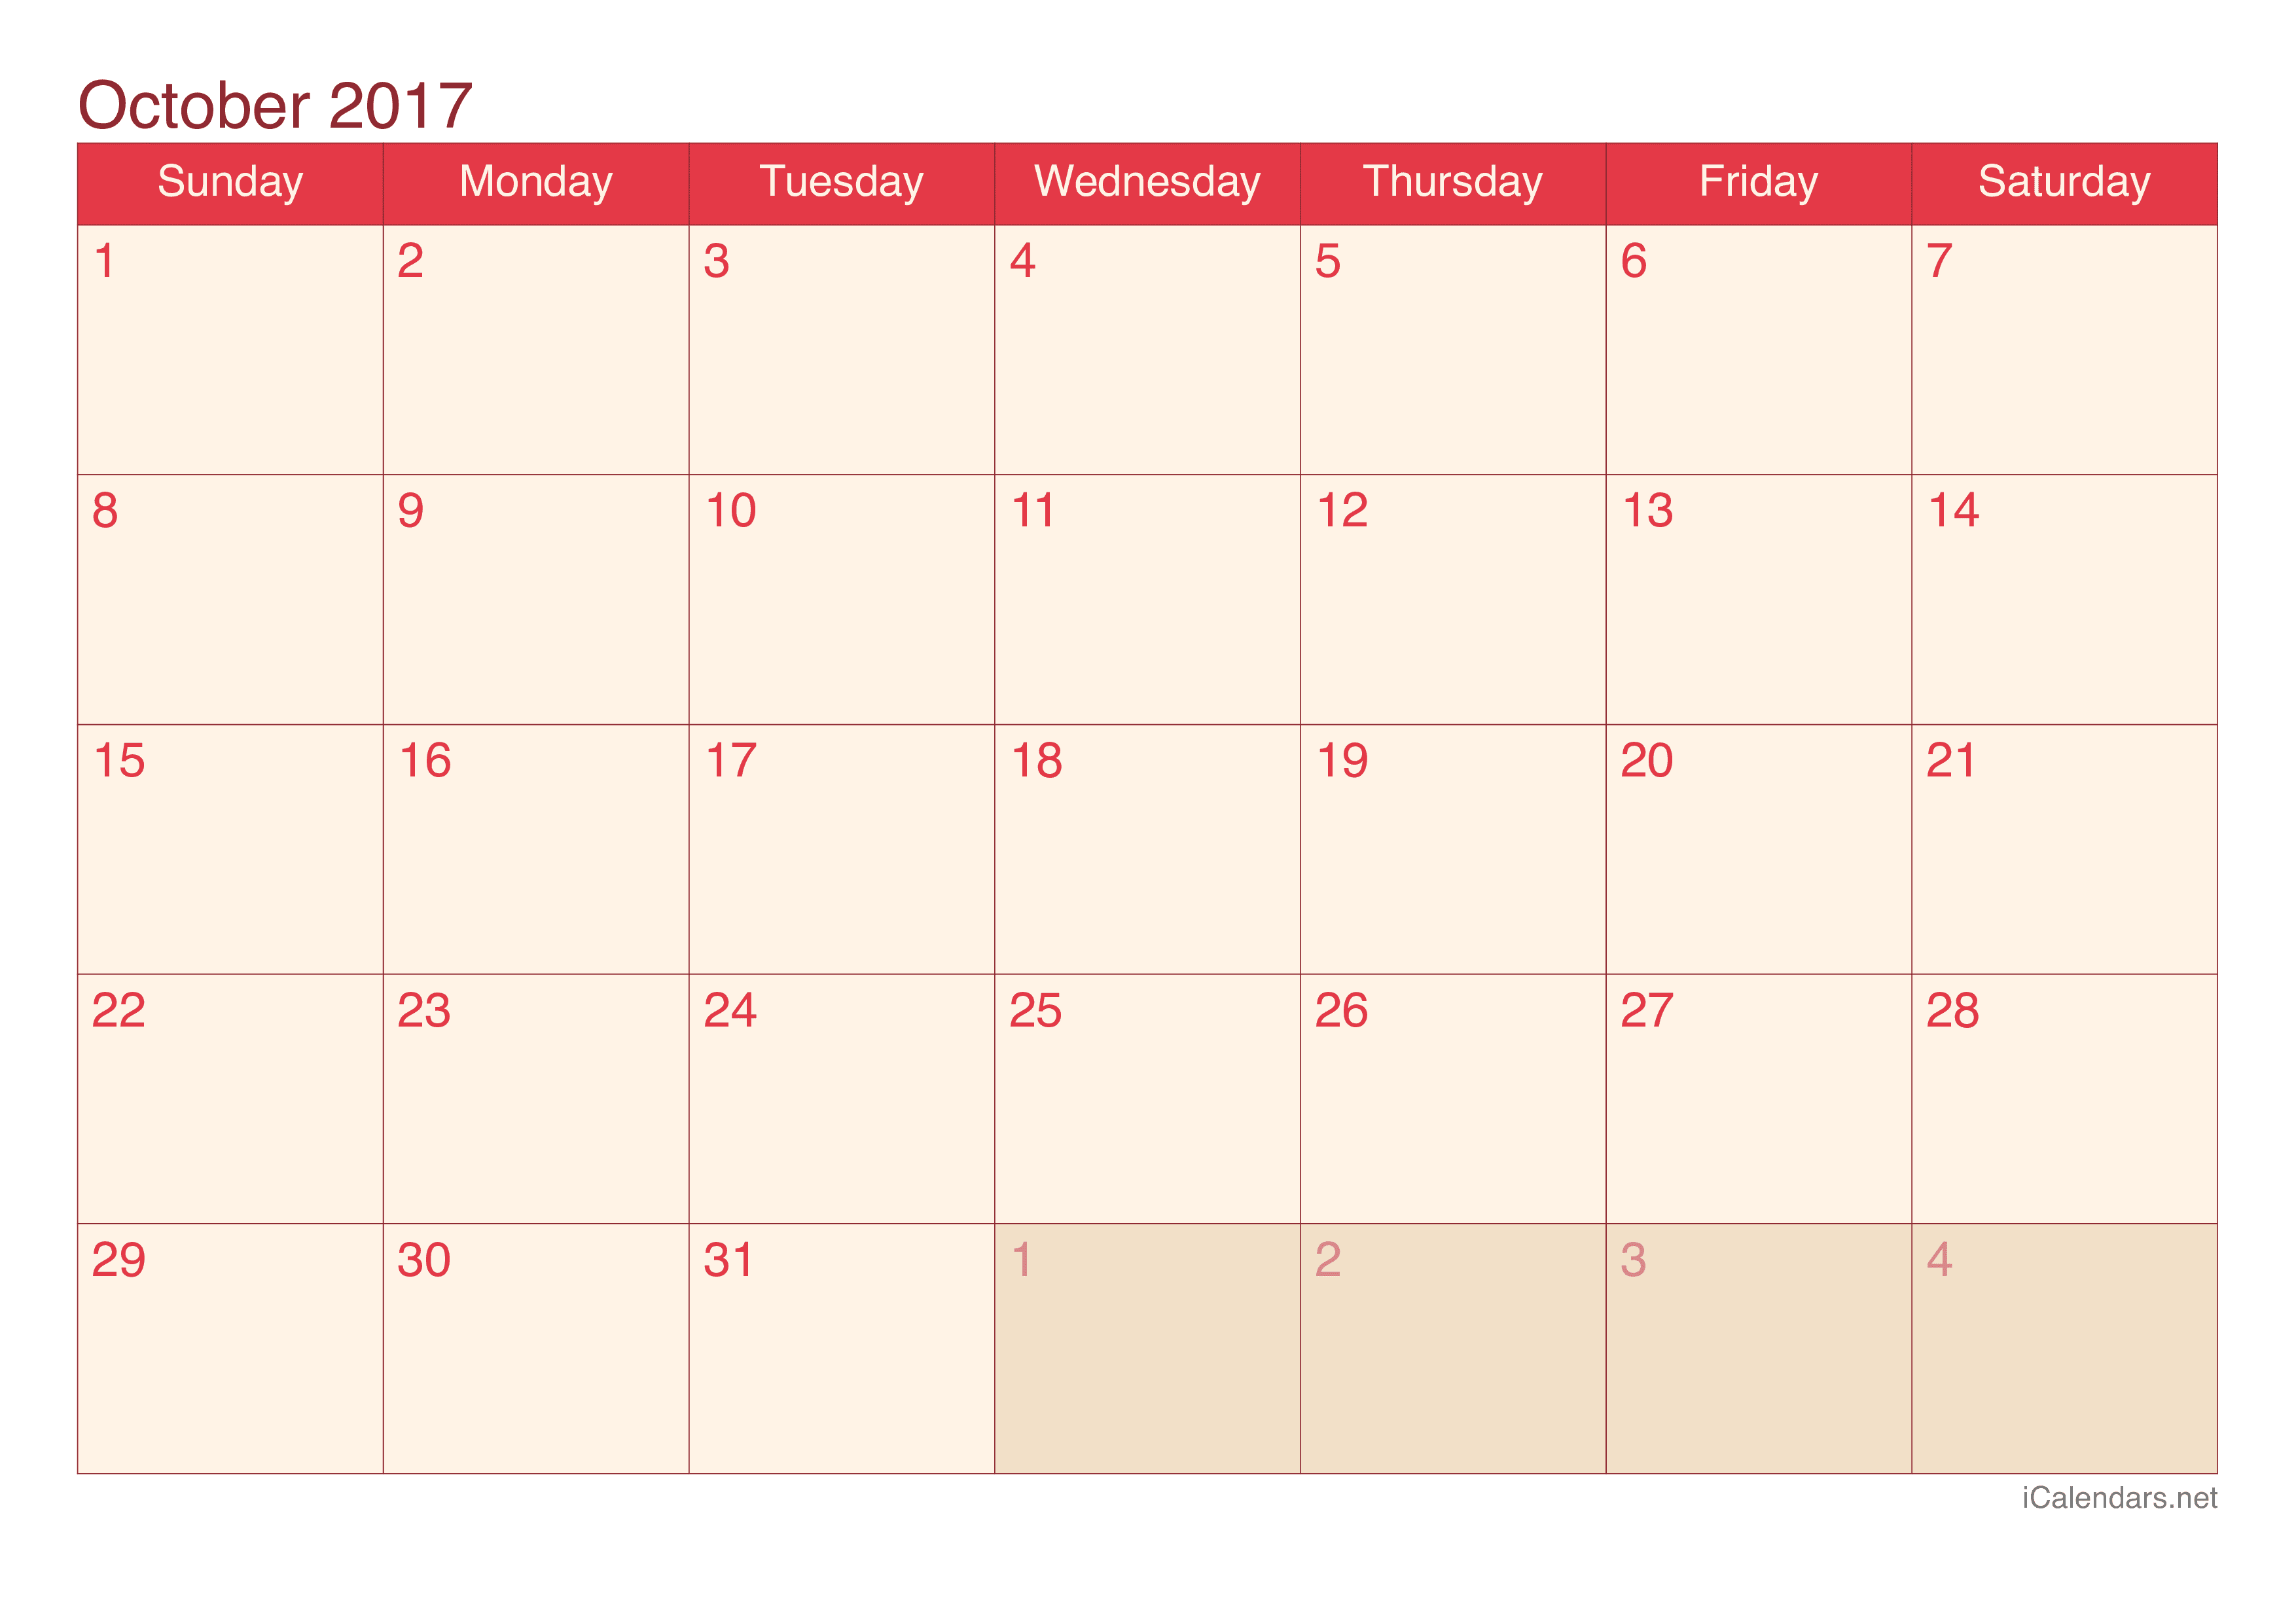 october-2017-printable-calendar-icalendars